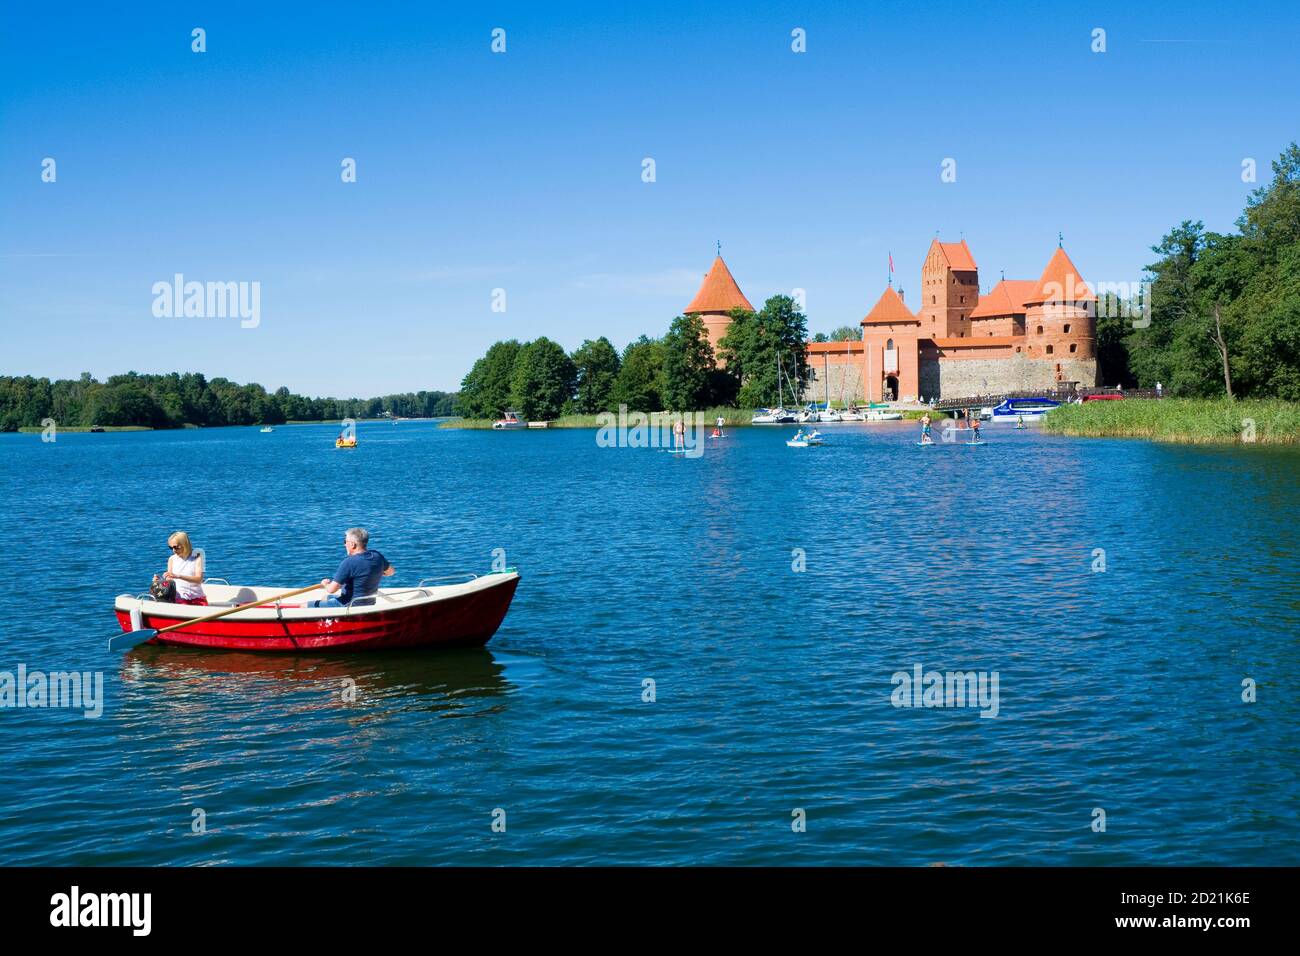 Gothic style red brick castle on an island on Galve Lake, Trakai, Lithuania Stock Photo